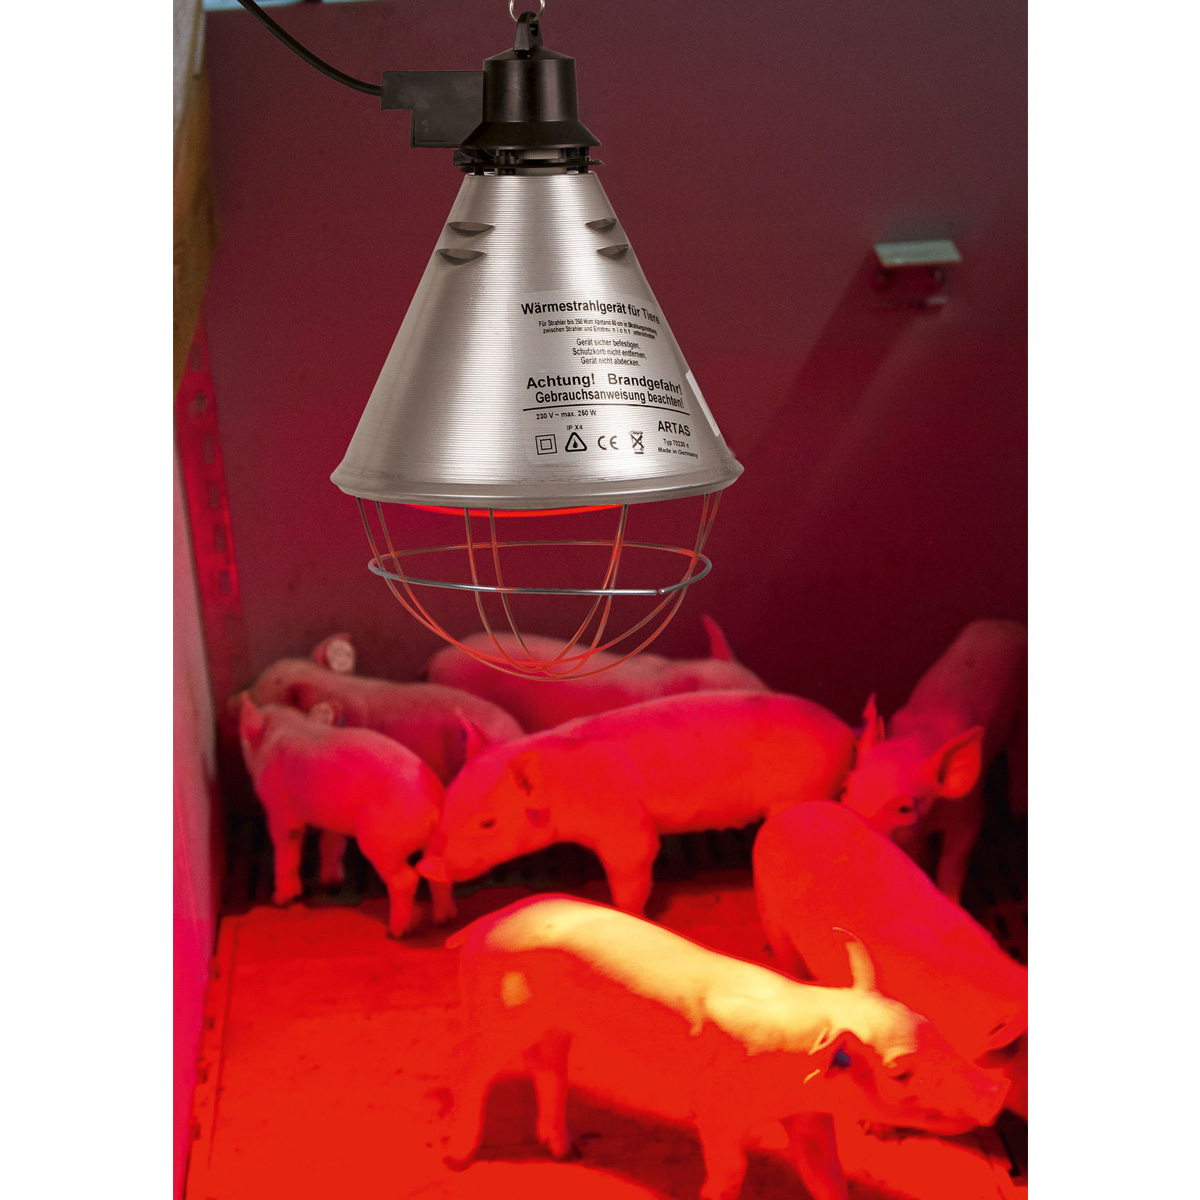 Acquista la lampada termica per pulcini: Fonte di calore perfetta